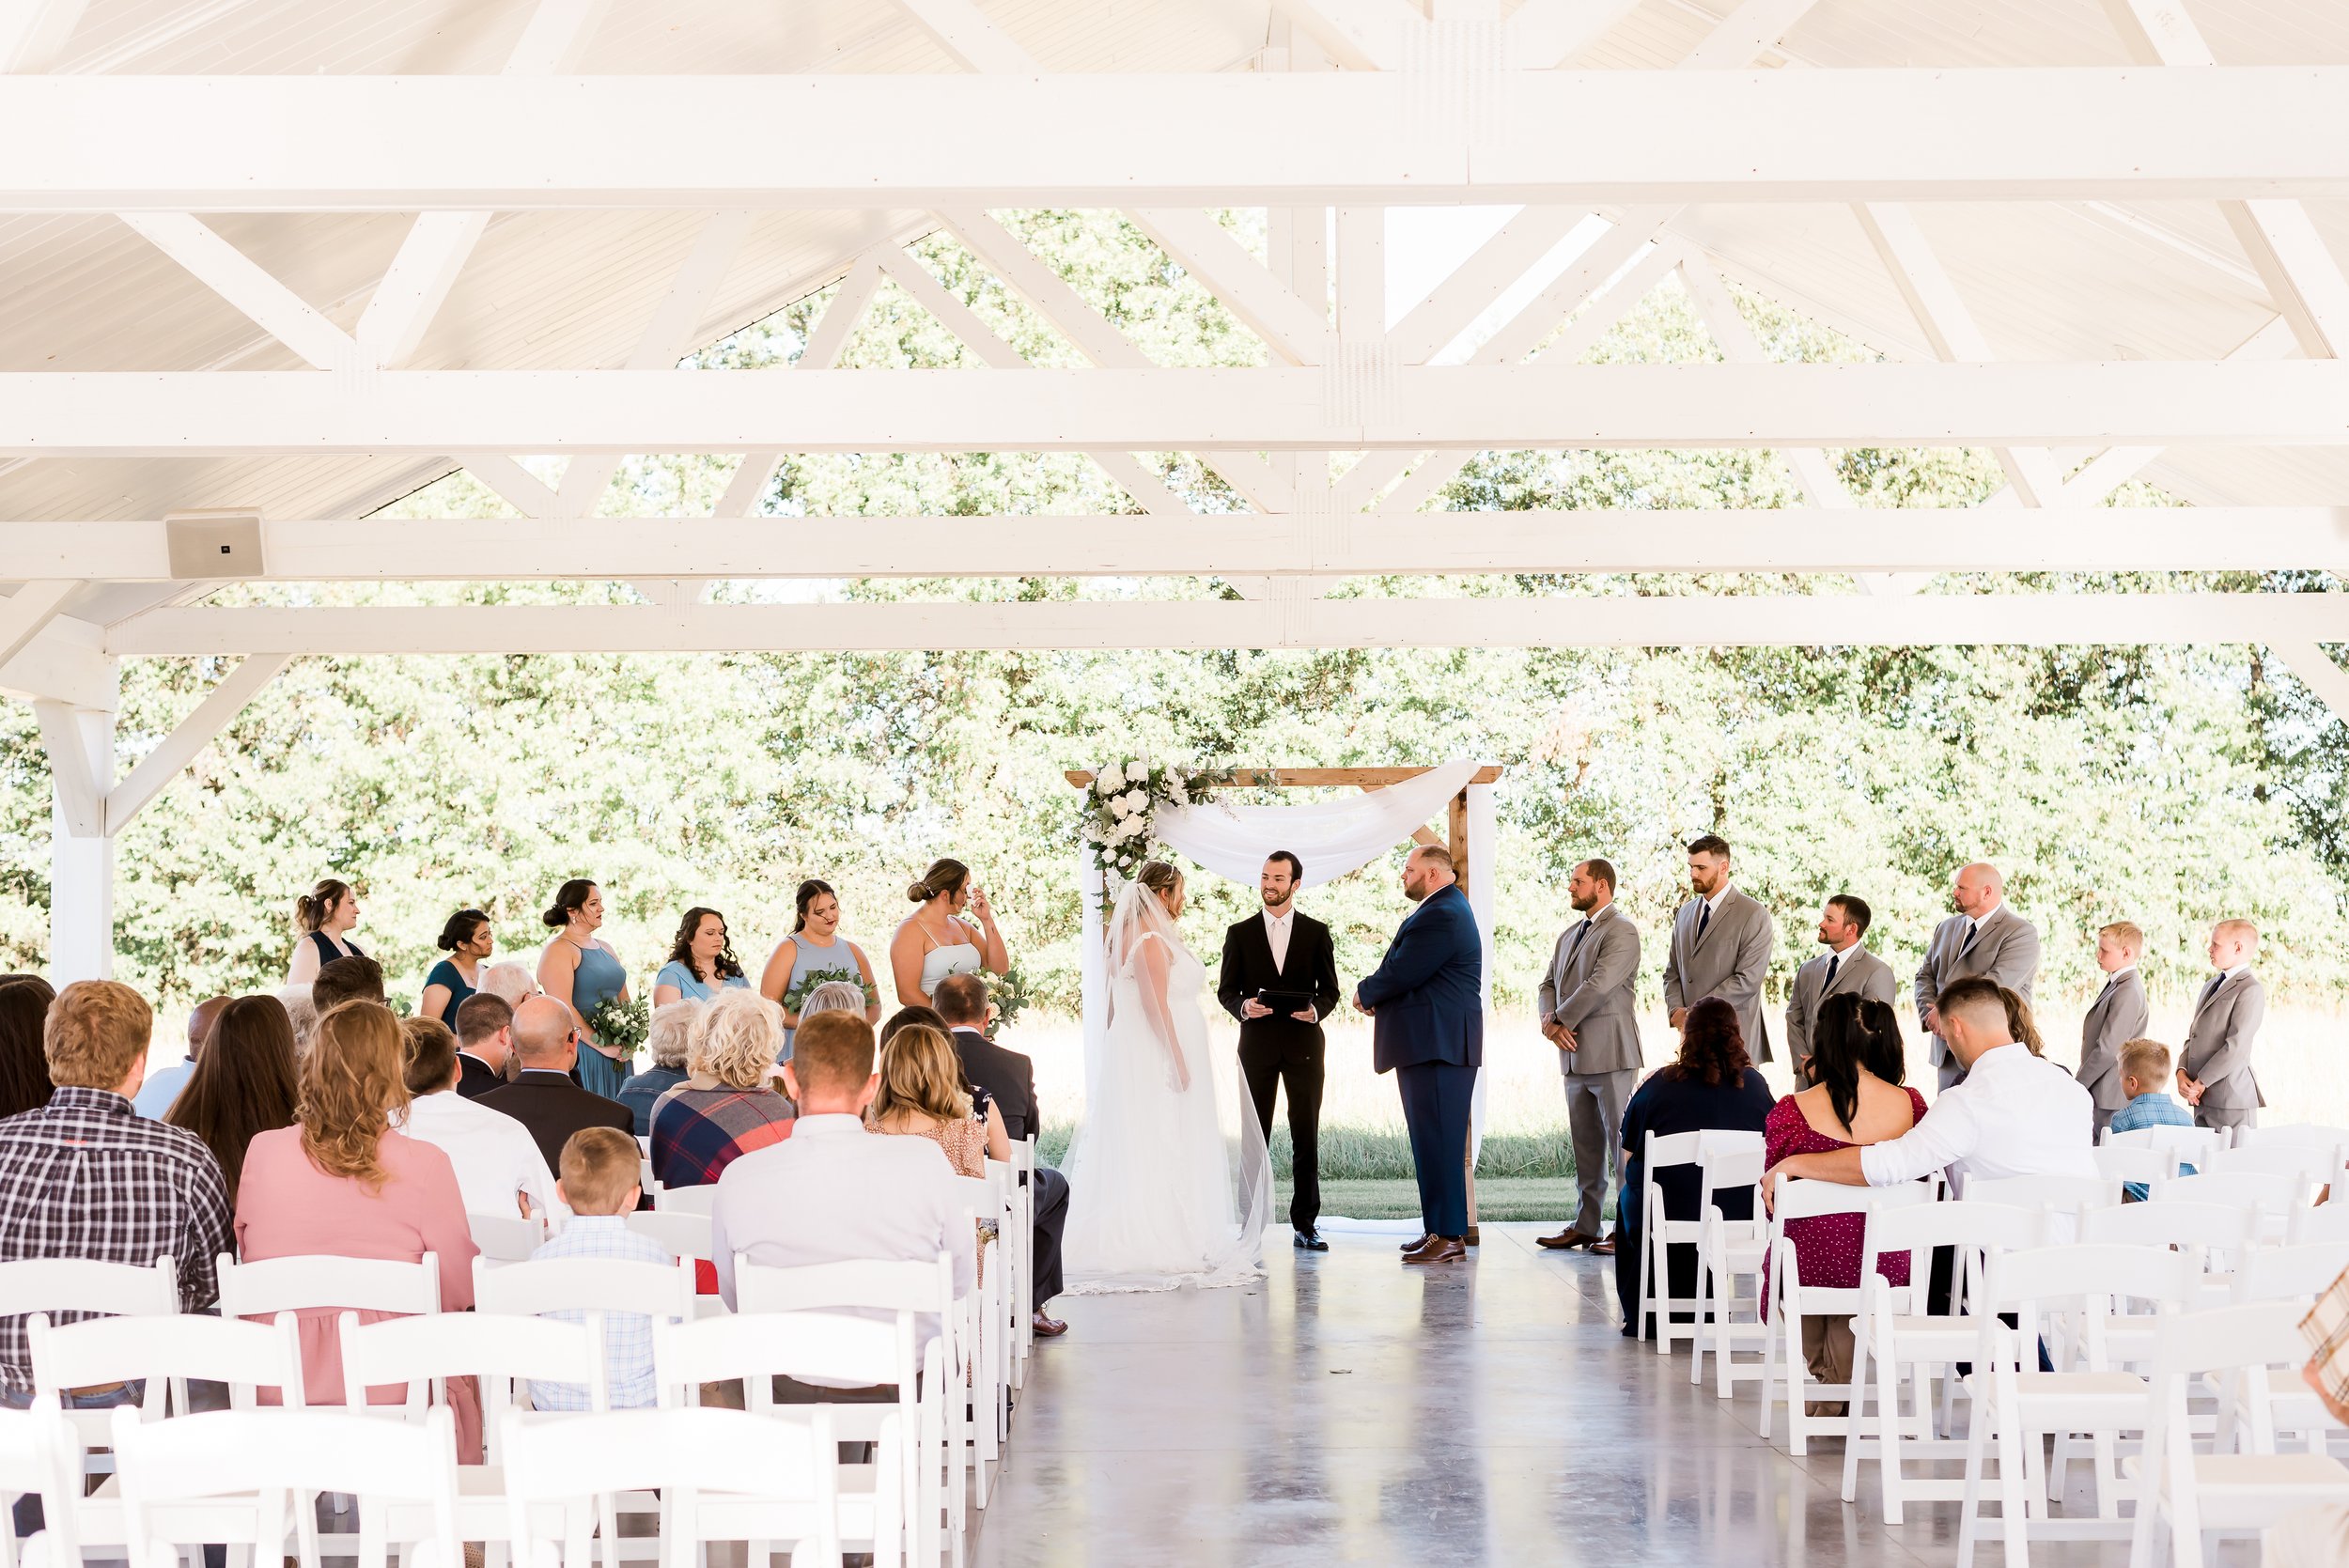 Intimate Outdoor Summer wedding ceremony pavilion Emerson Fields missouri (1).jpg